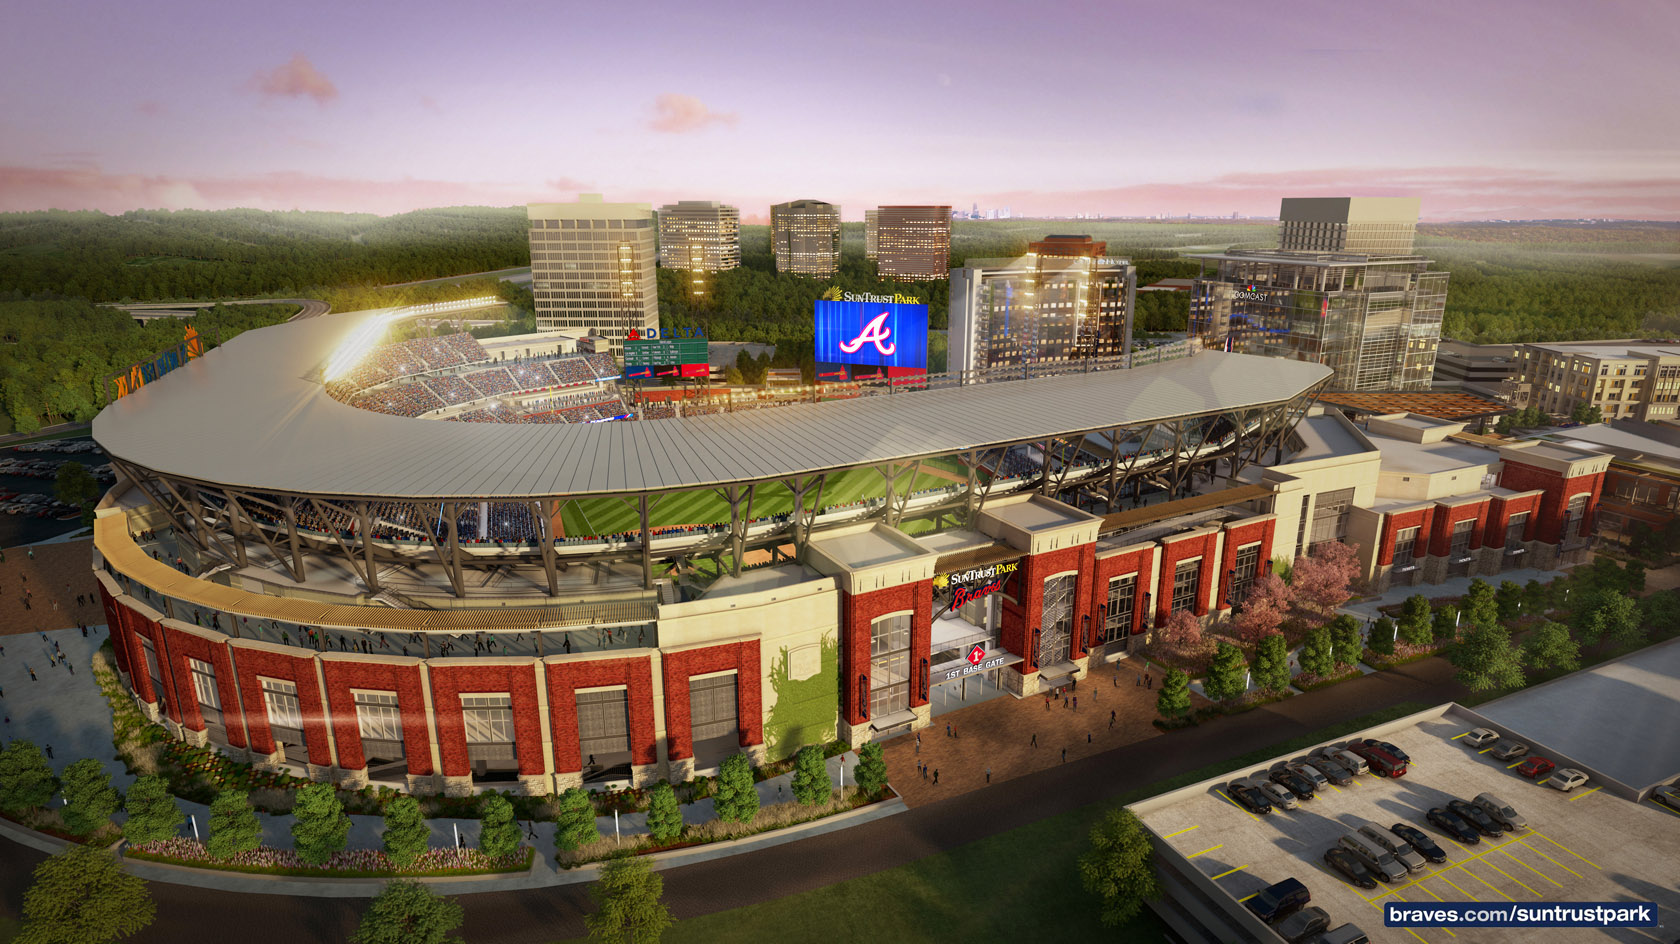 The Atlanta Braves' new stadium will be SunTrust Park, PHOTOS, Sports